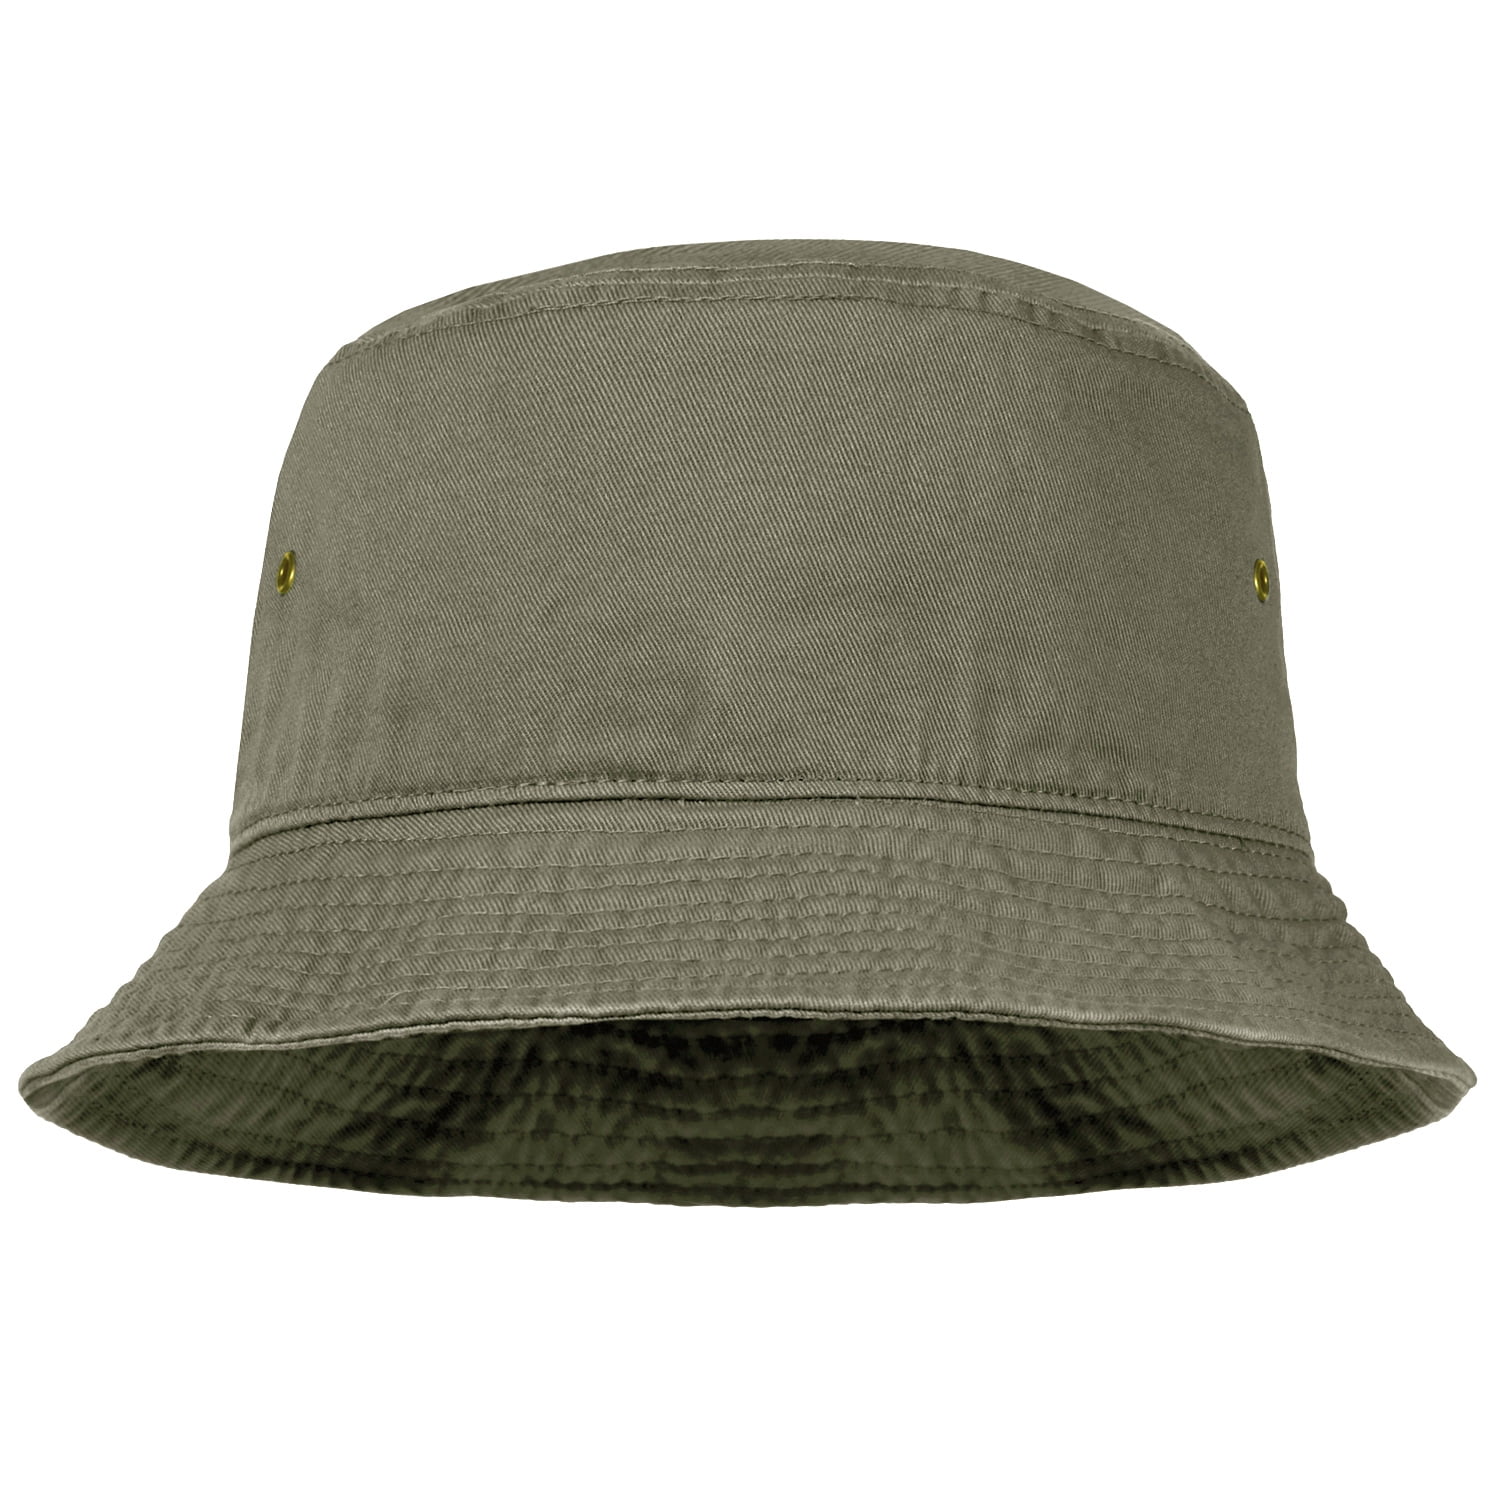 Unisex Cool Beer Beach Travel Bucket Hats for Men Women Summer Outdoor Fishing Hat Fashion Packable Sun Hat 